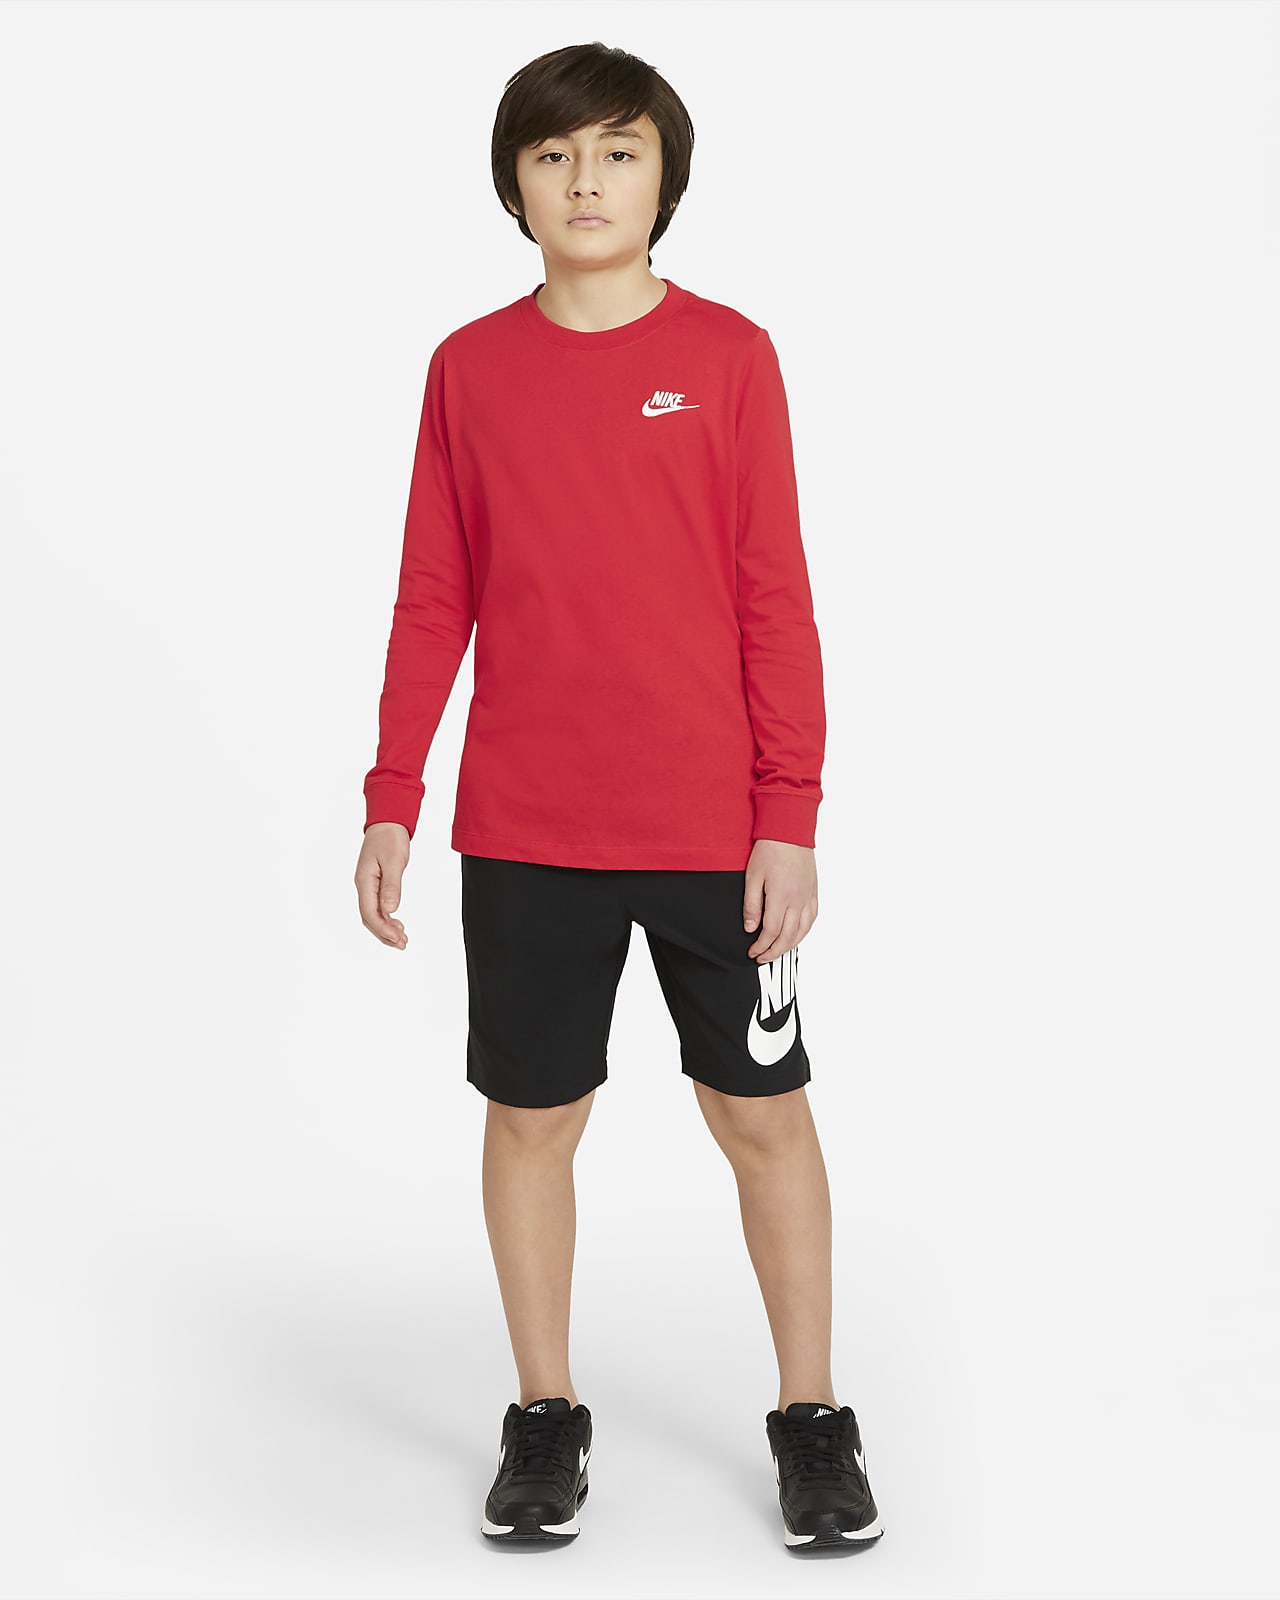 Genuine Merchandise Nike Boston Red Sox Long Sleeves Youth Unisex Sport  Shirt XL